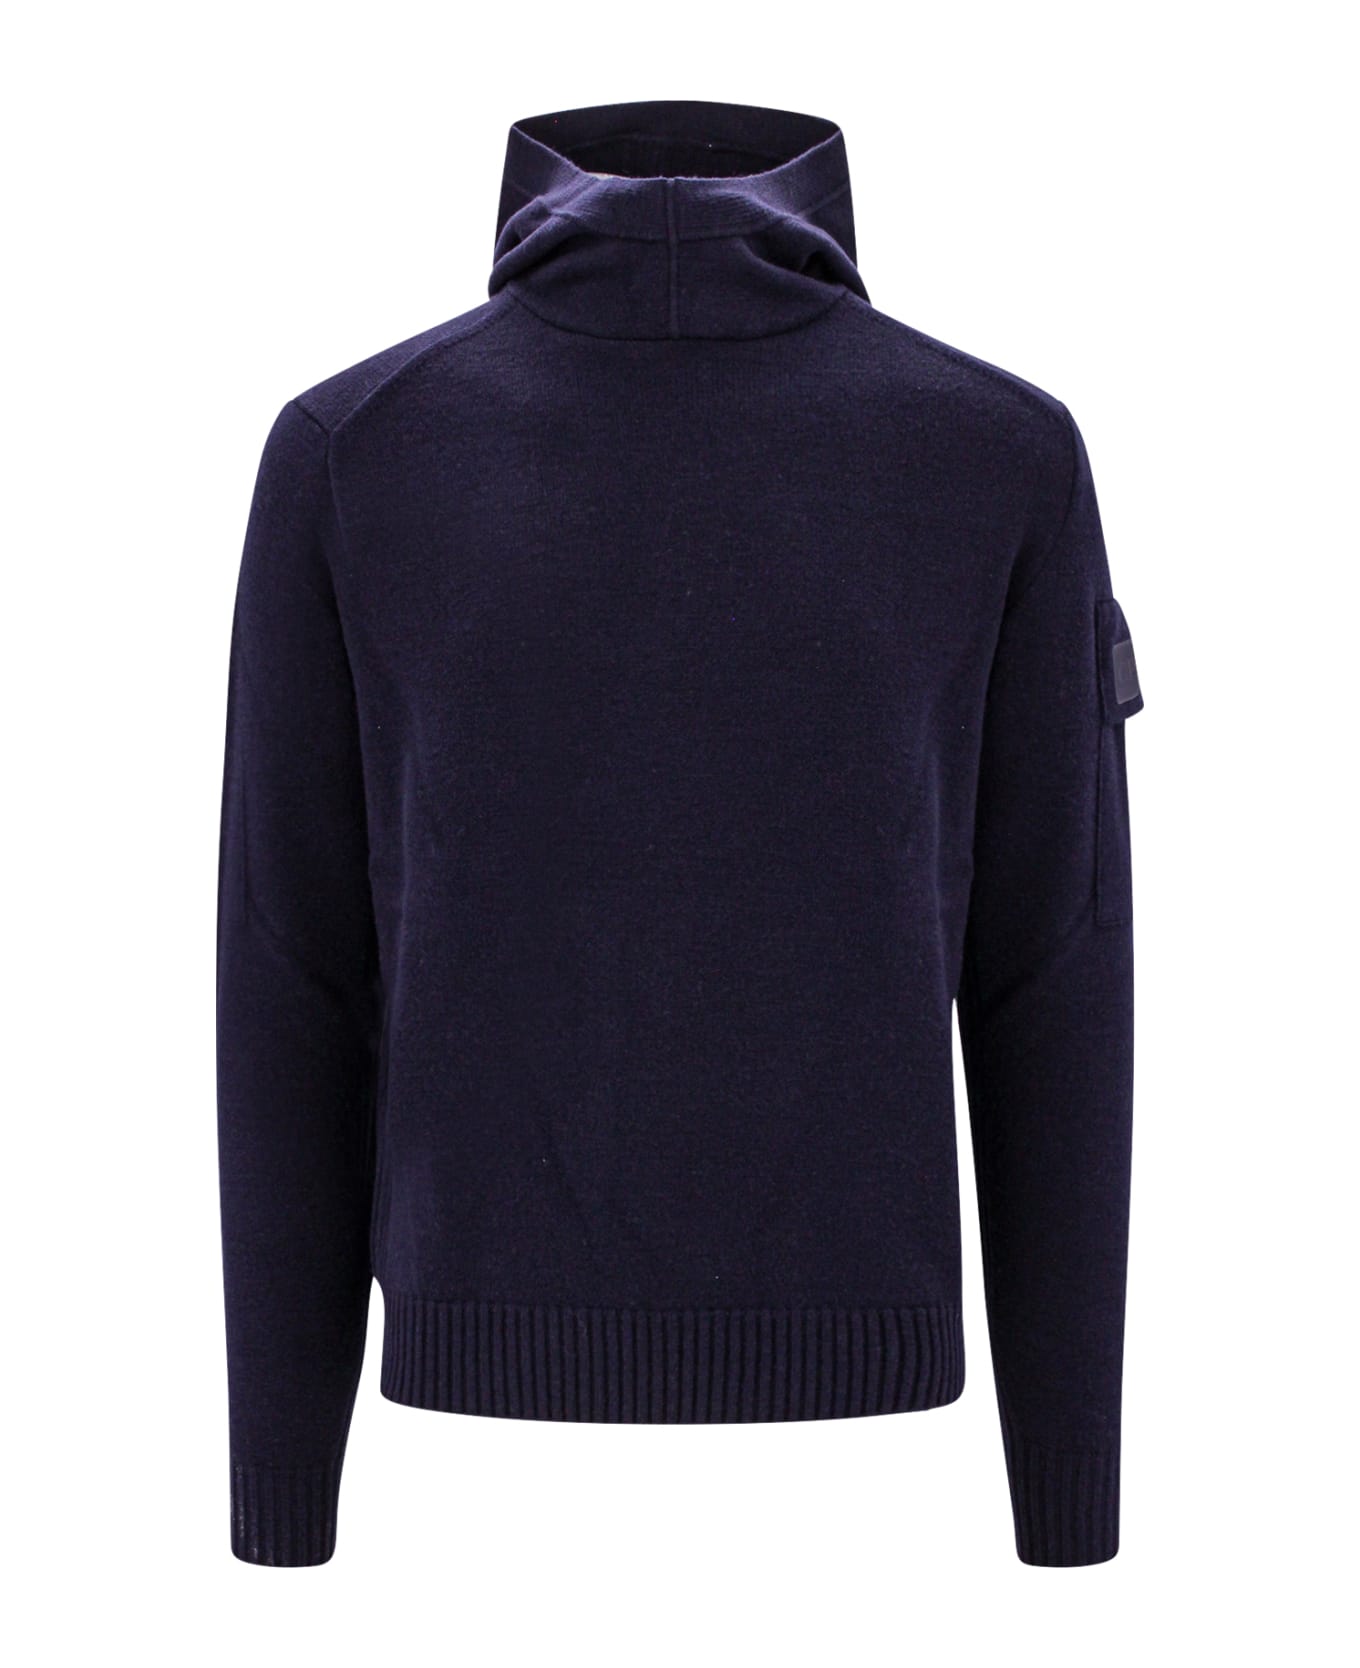 C.P. Company Sweater - Blue